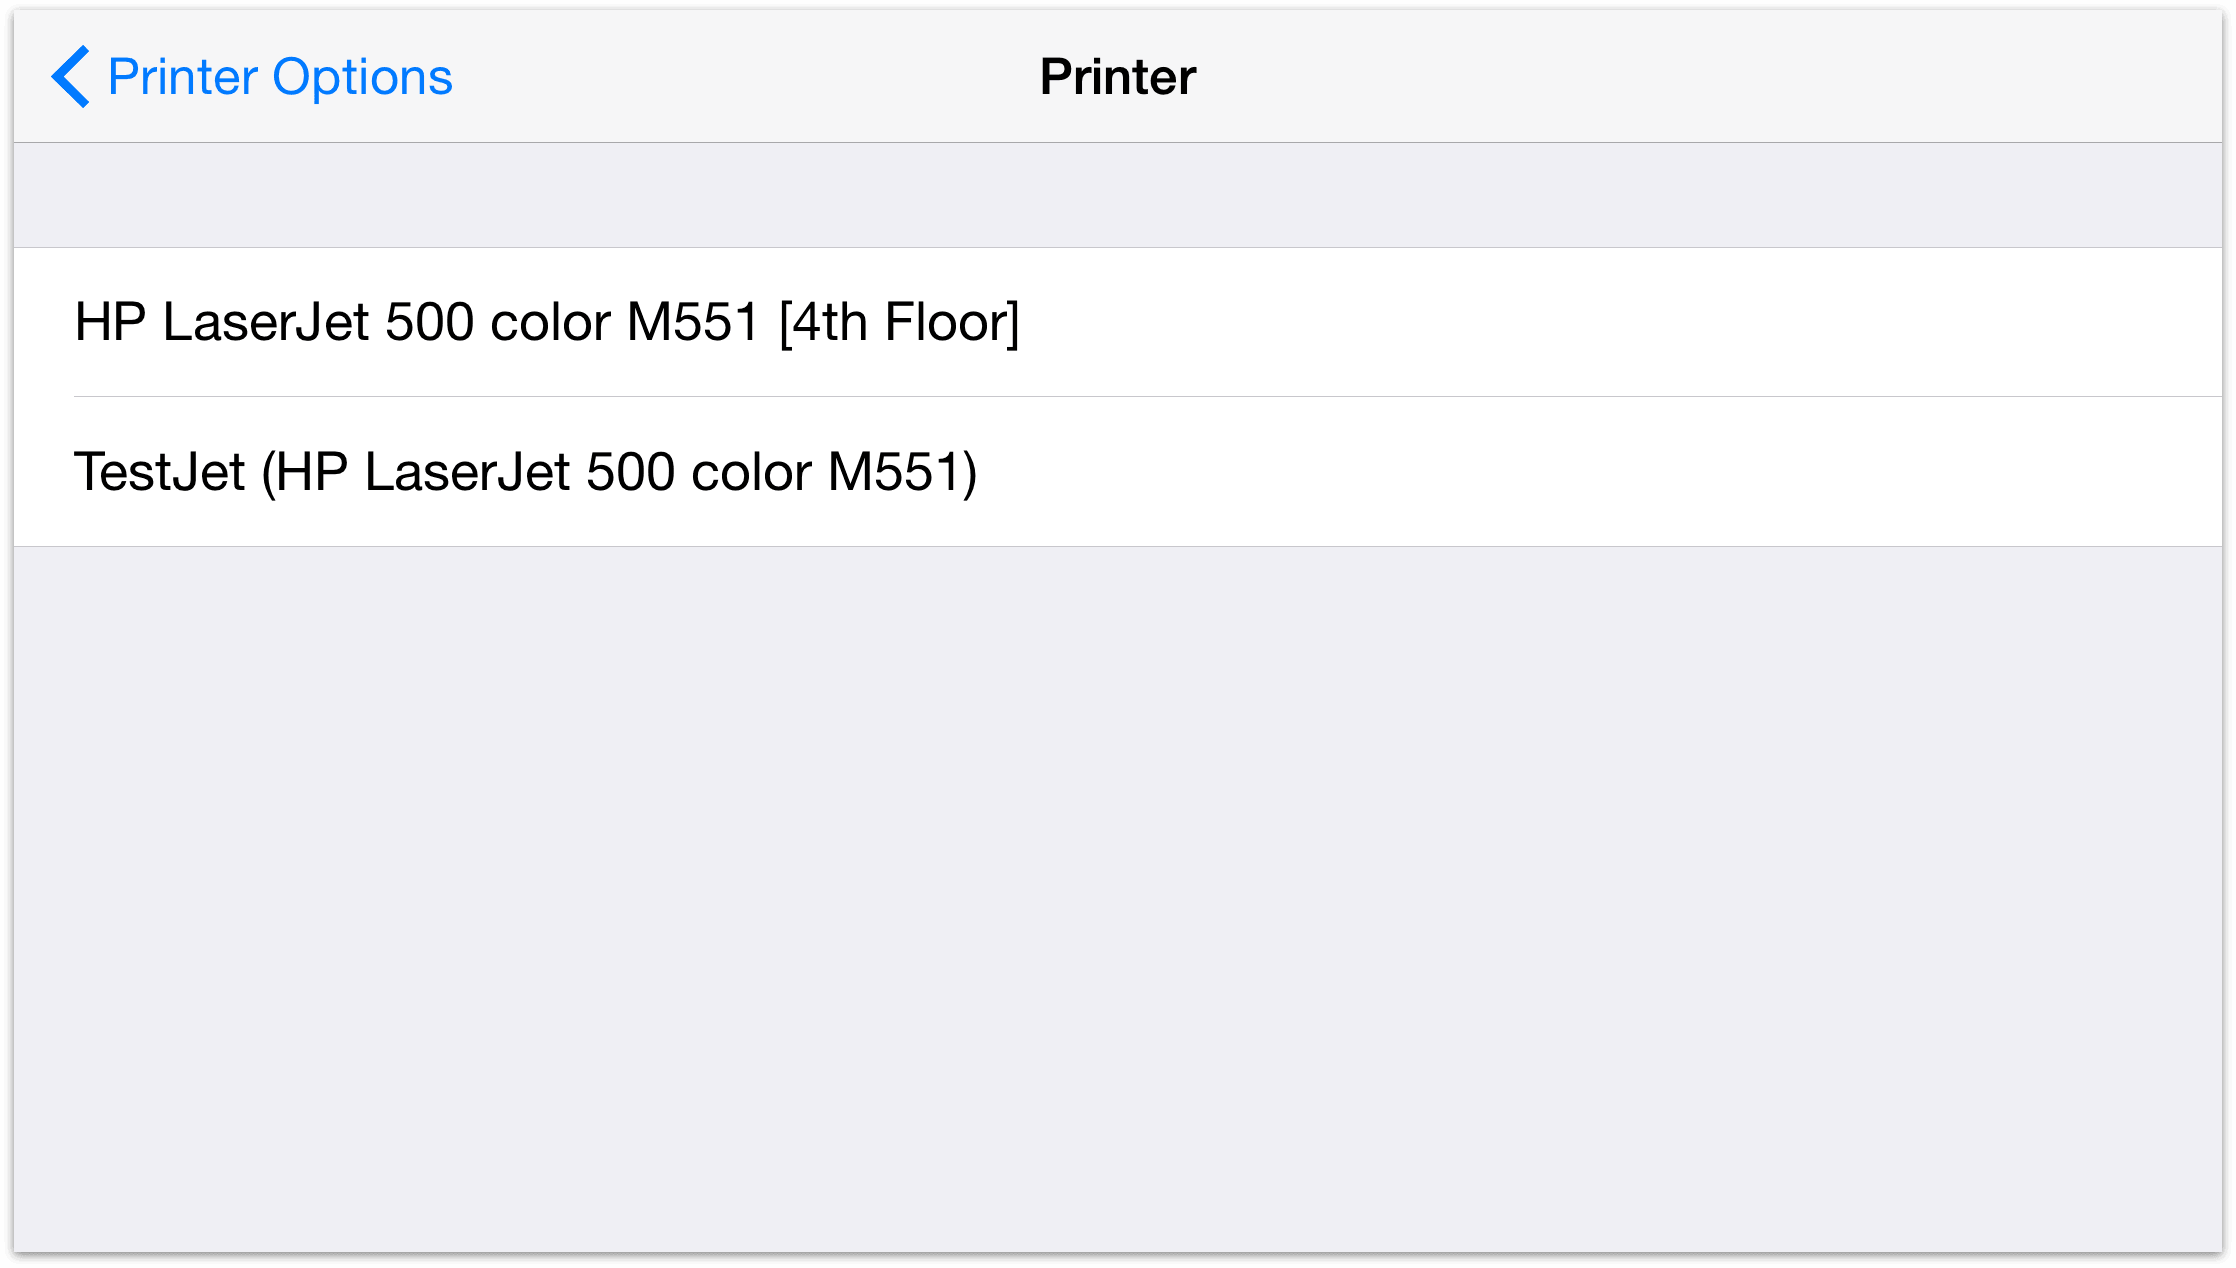 Select a Printer